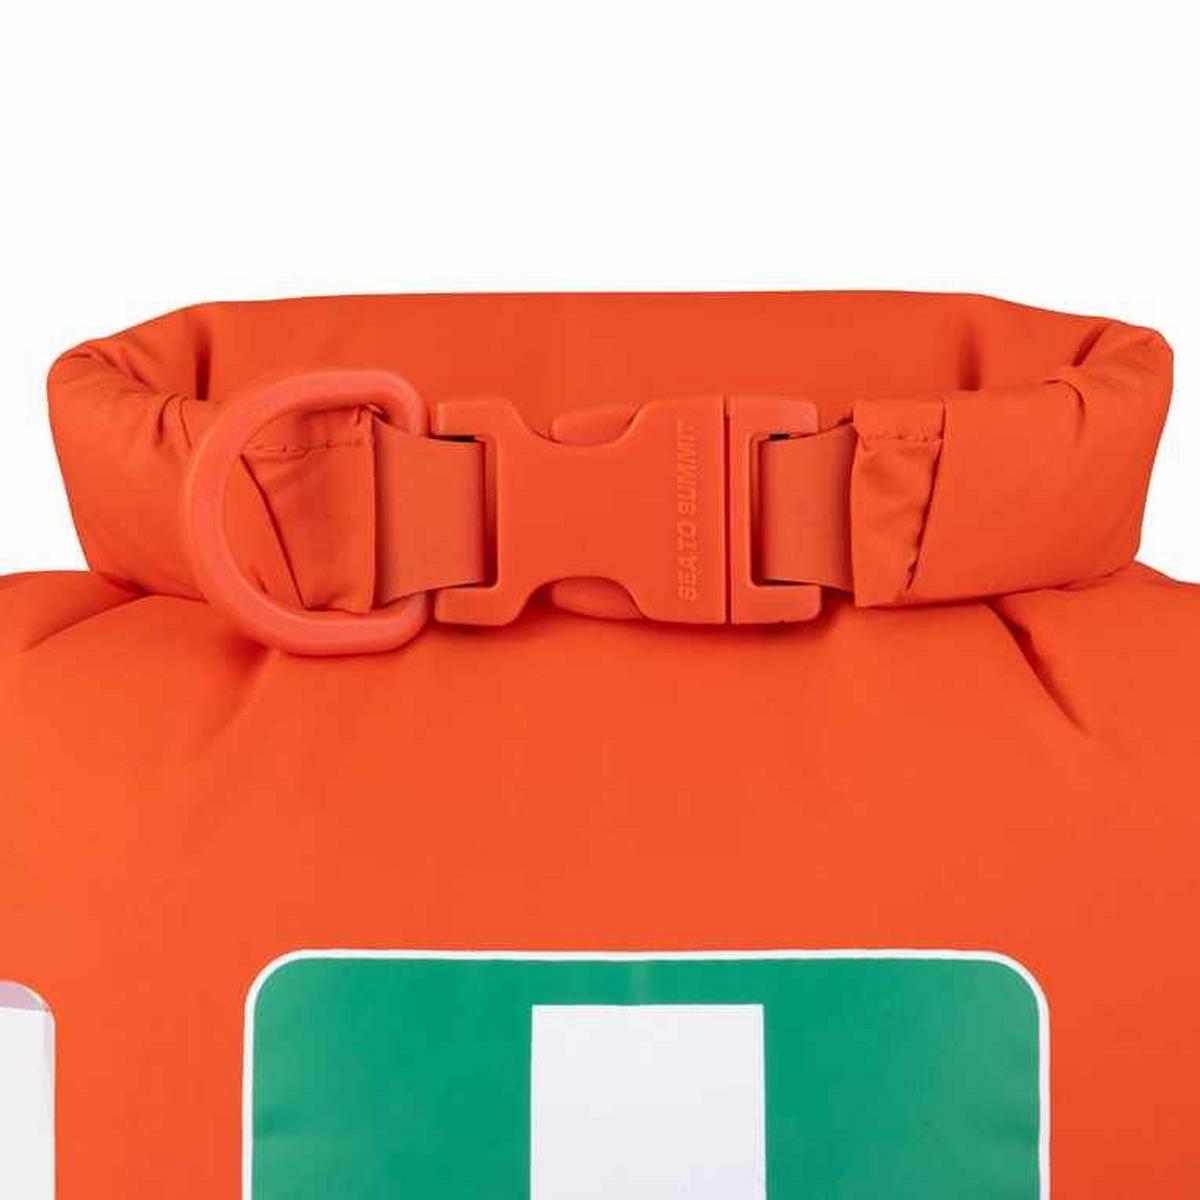 Sea  To Summit First Aid Dry Bag 3L - Orange